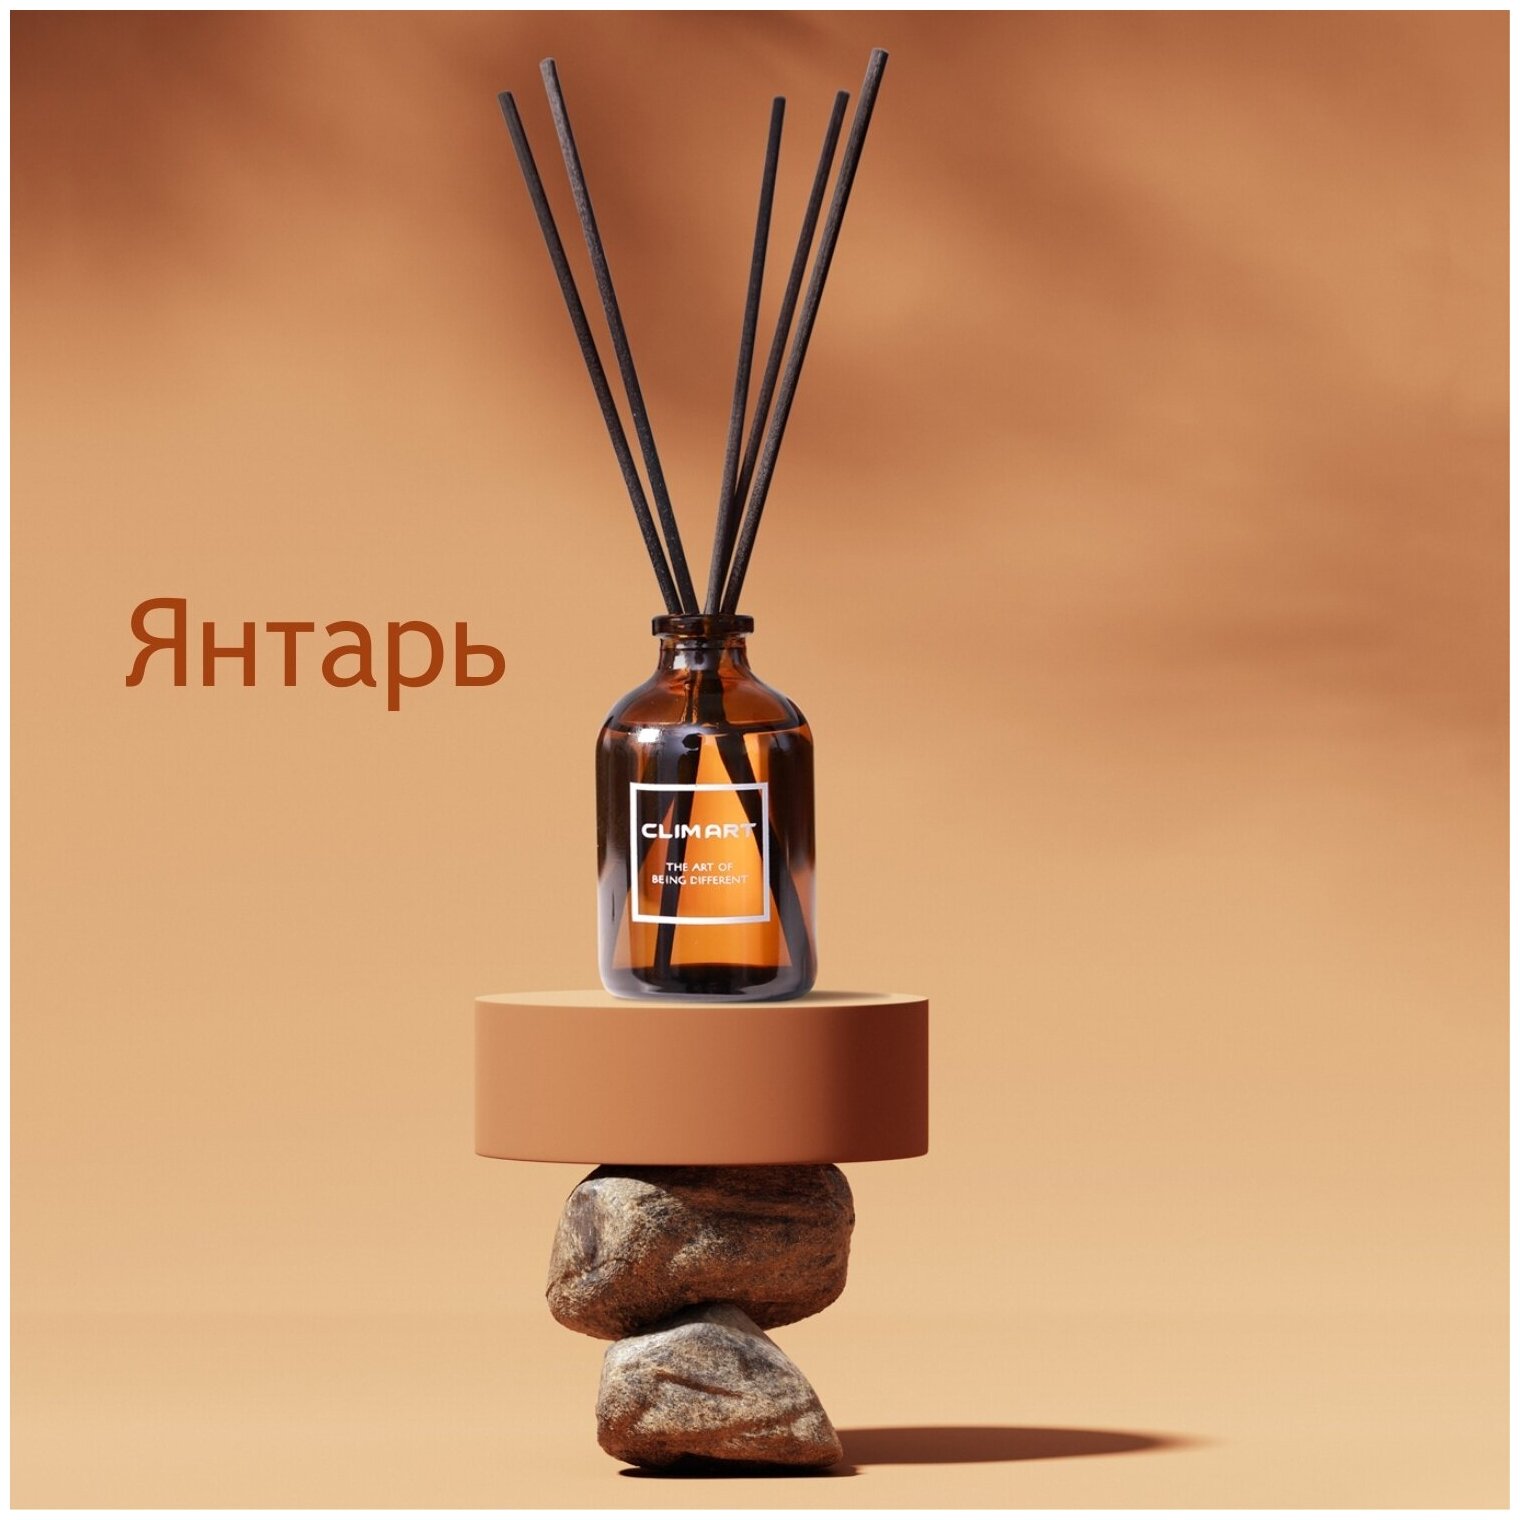 Ароматизатор для дома с палочками, ароматический диффузор Clim Art Янтарь, 50 мл, подарок мужчинам и женщинам